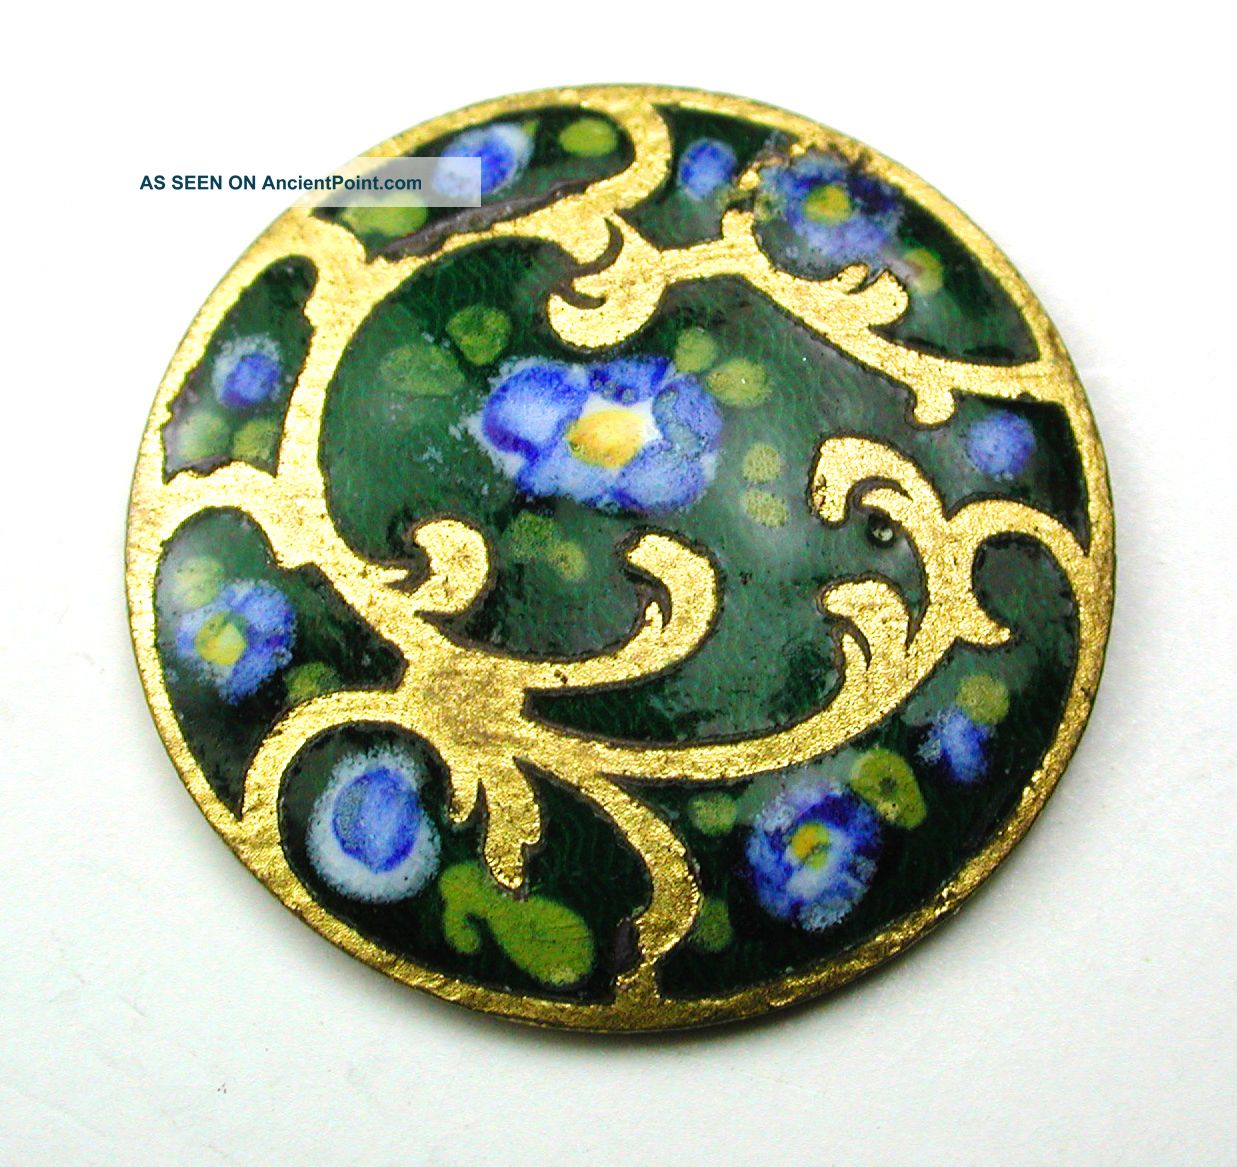 Antique Enamel Button Hand Painted Blue Flowers On Green & Brass Design 3/4 